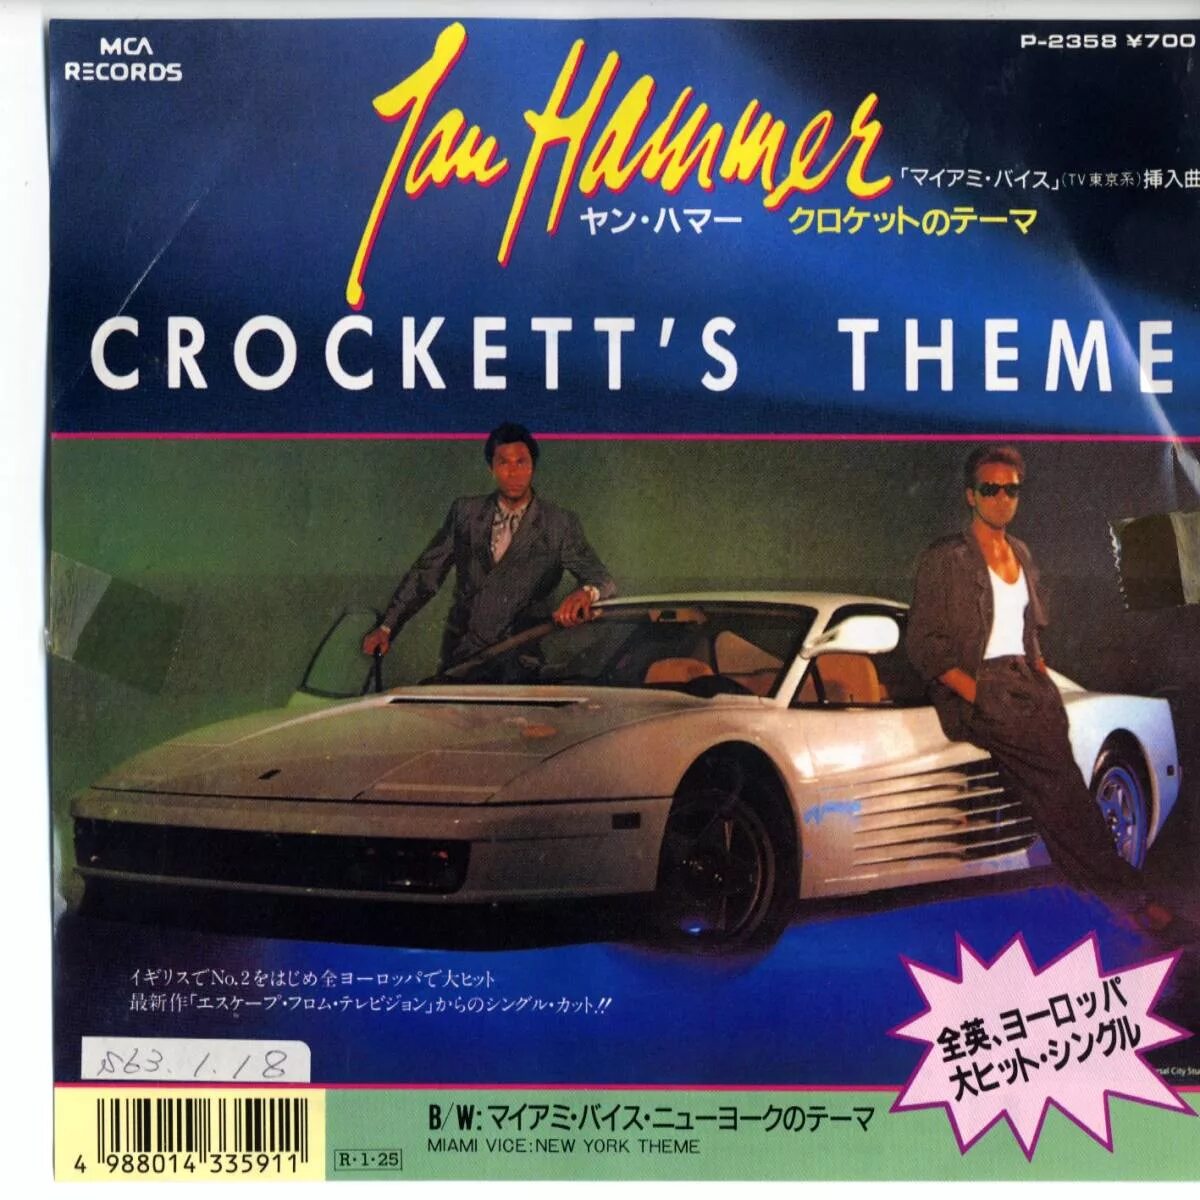 Jan Hammer Crockett's Theme. Jan Hammer Crockett's Theme Miami vice. Полиция Майами. Hammer crockett s theme